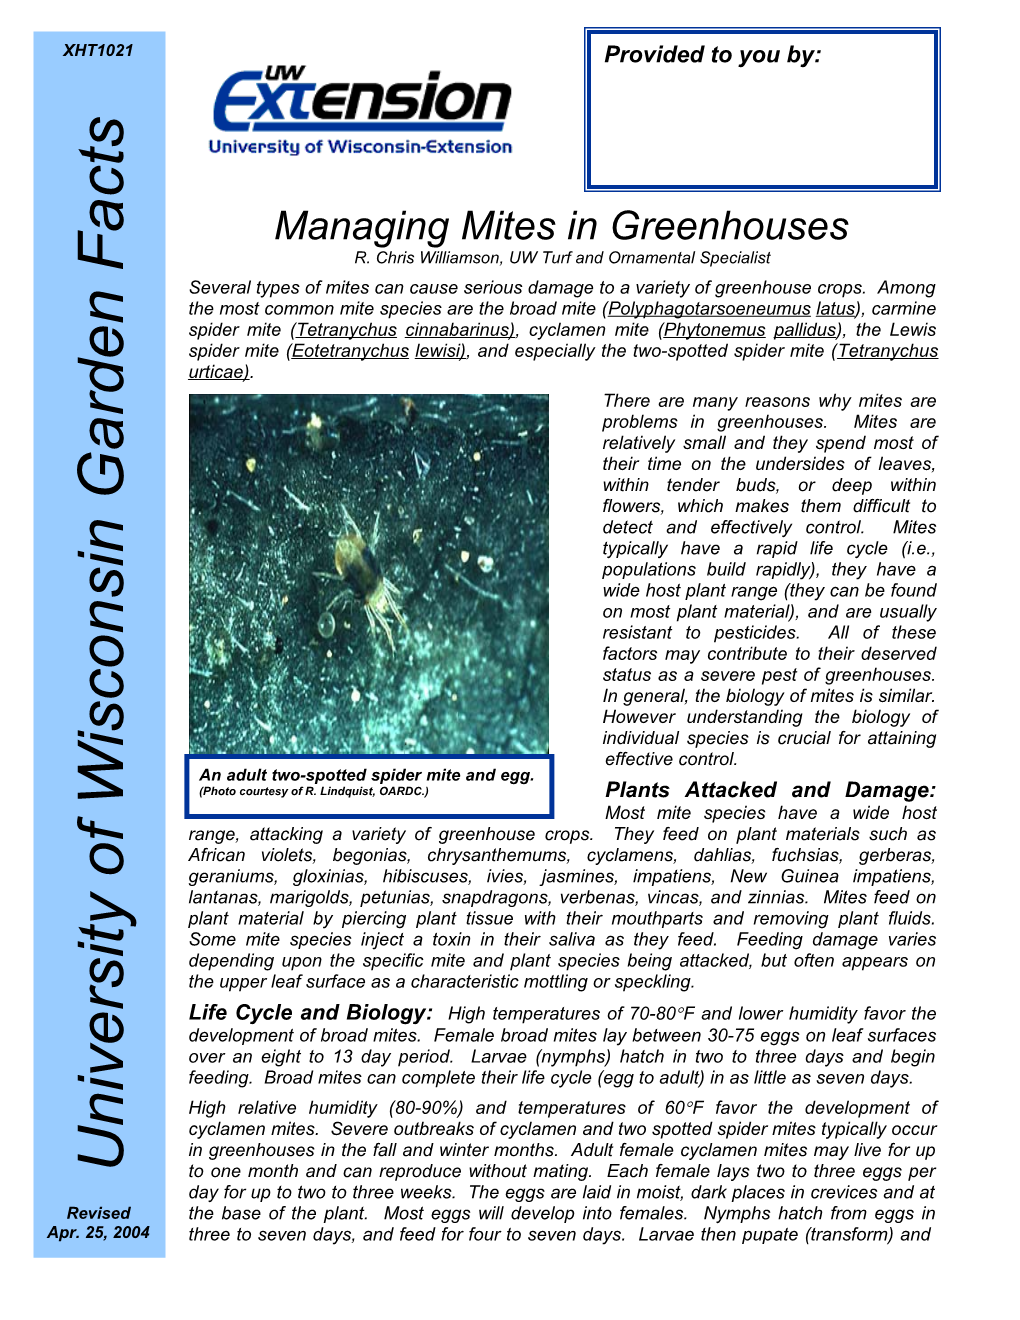 Managing Mites in Greenhouses